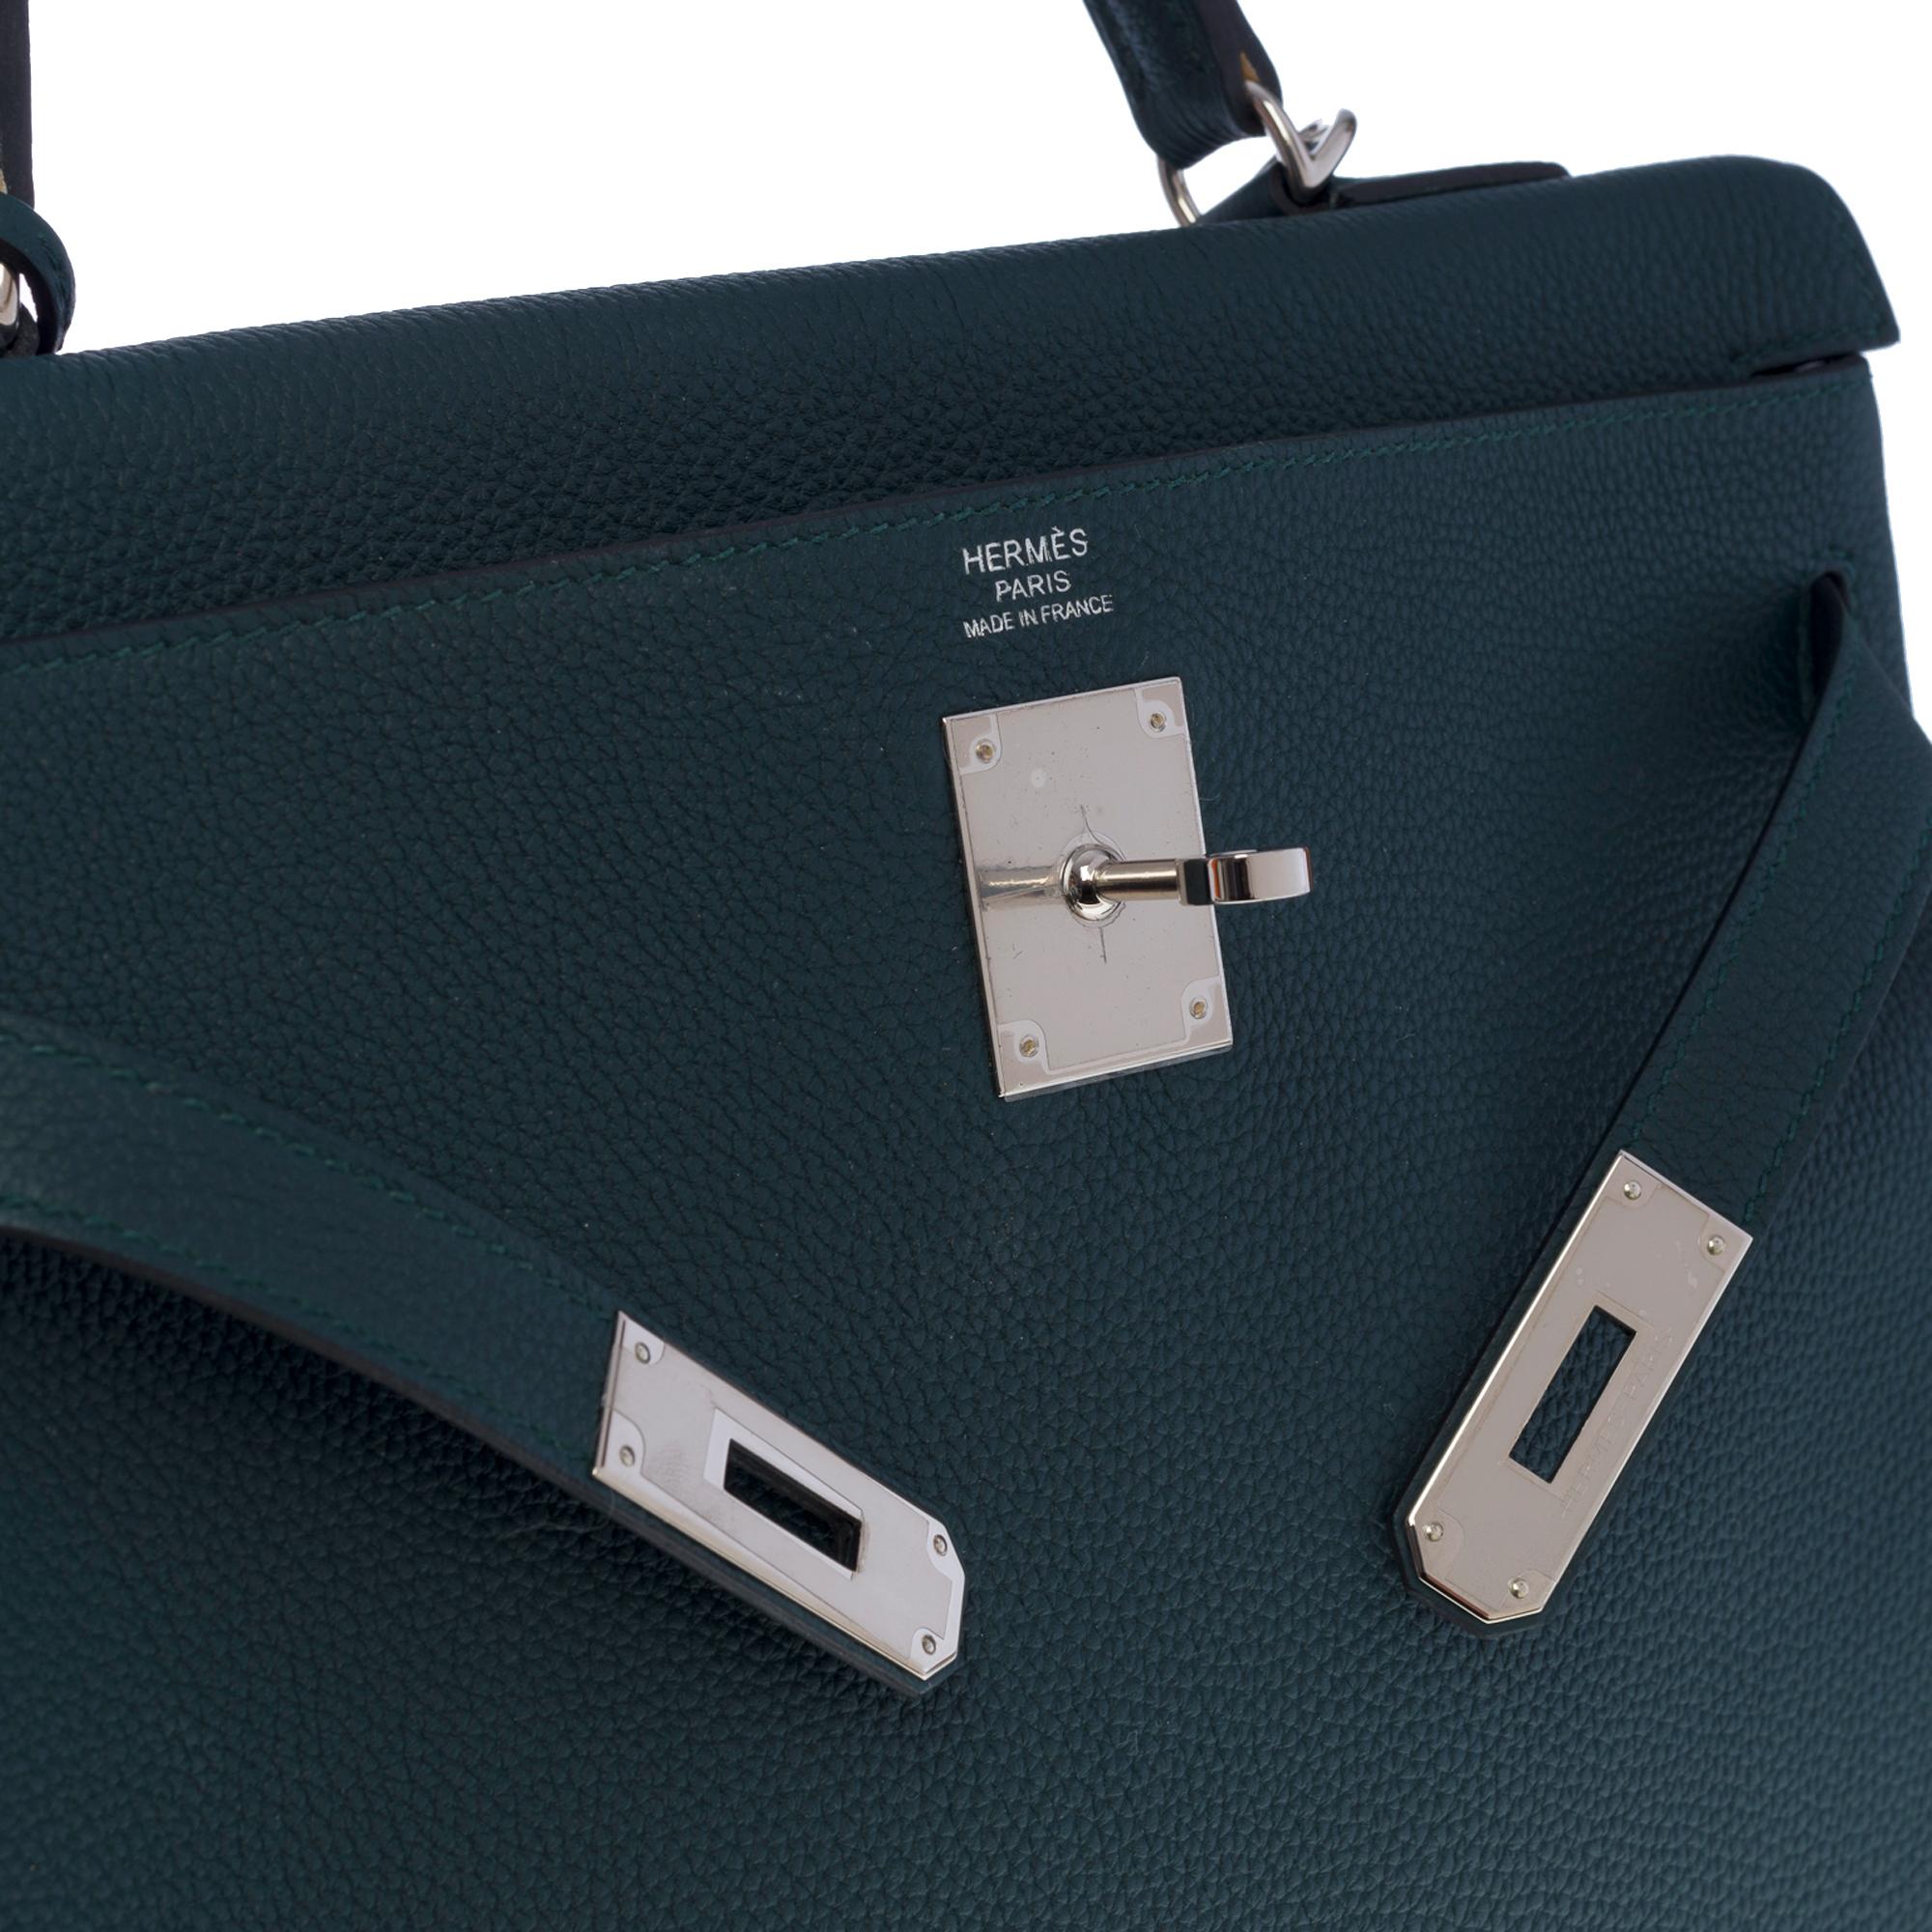 New Hermès Kelly 32 retourne handbag strap in Green Cypres Togo leather, SHW 2